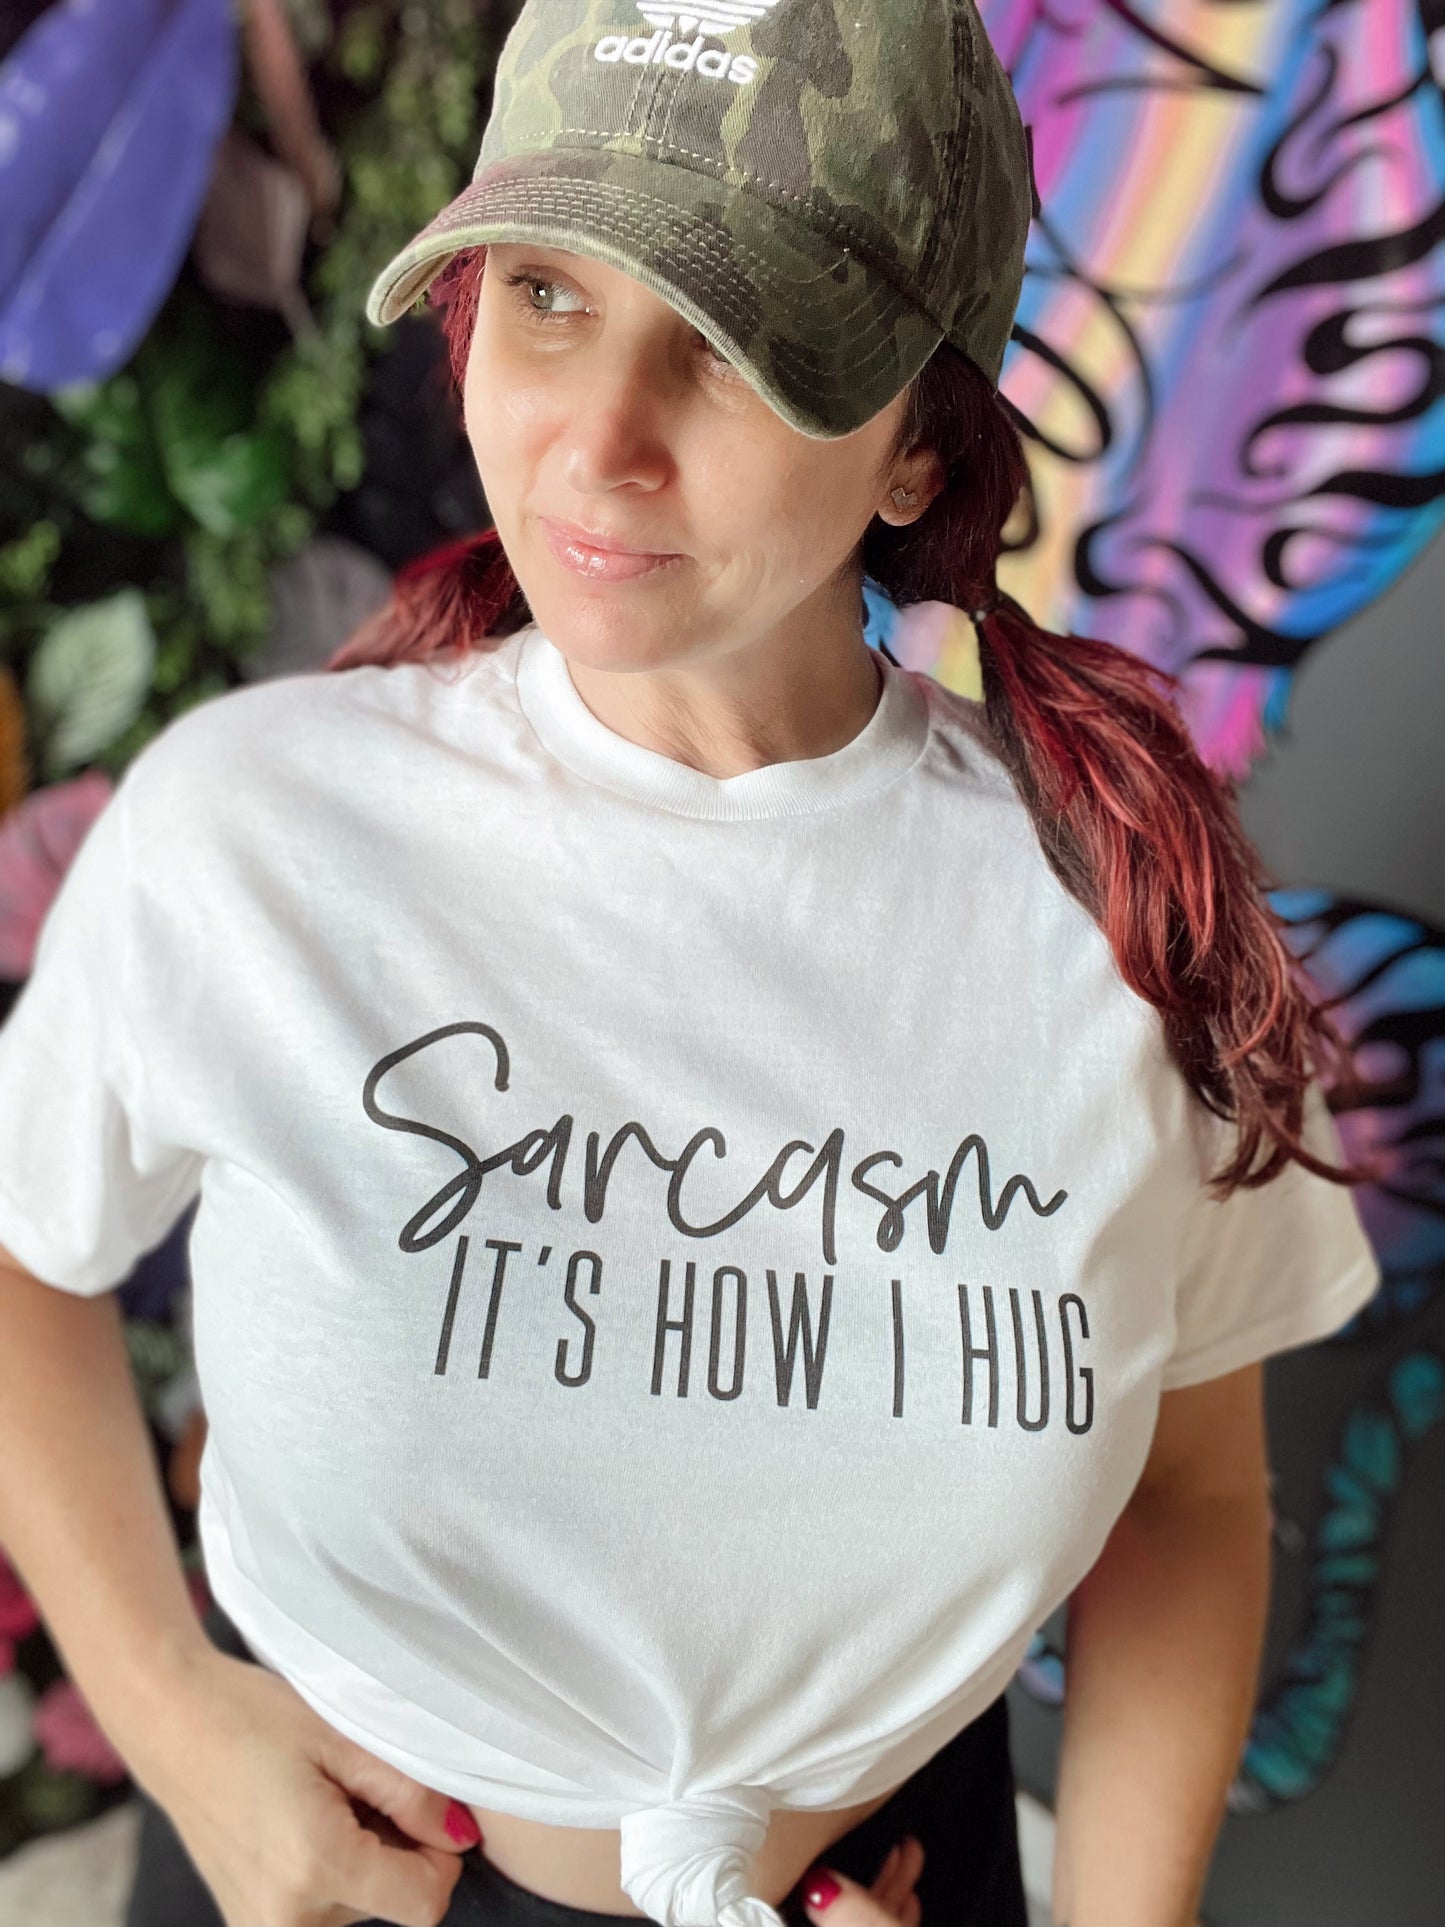 Sarcasm…It’s How I Hug